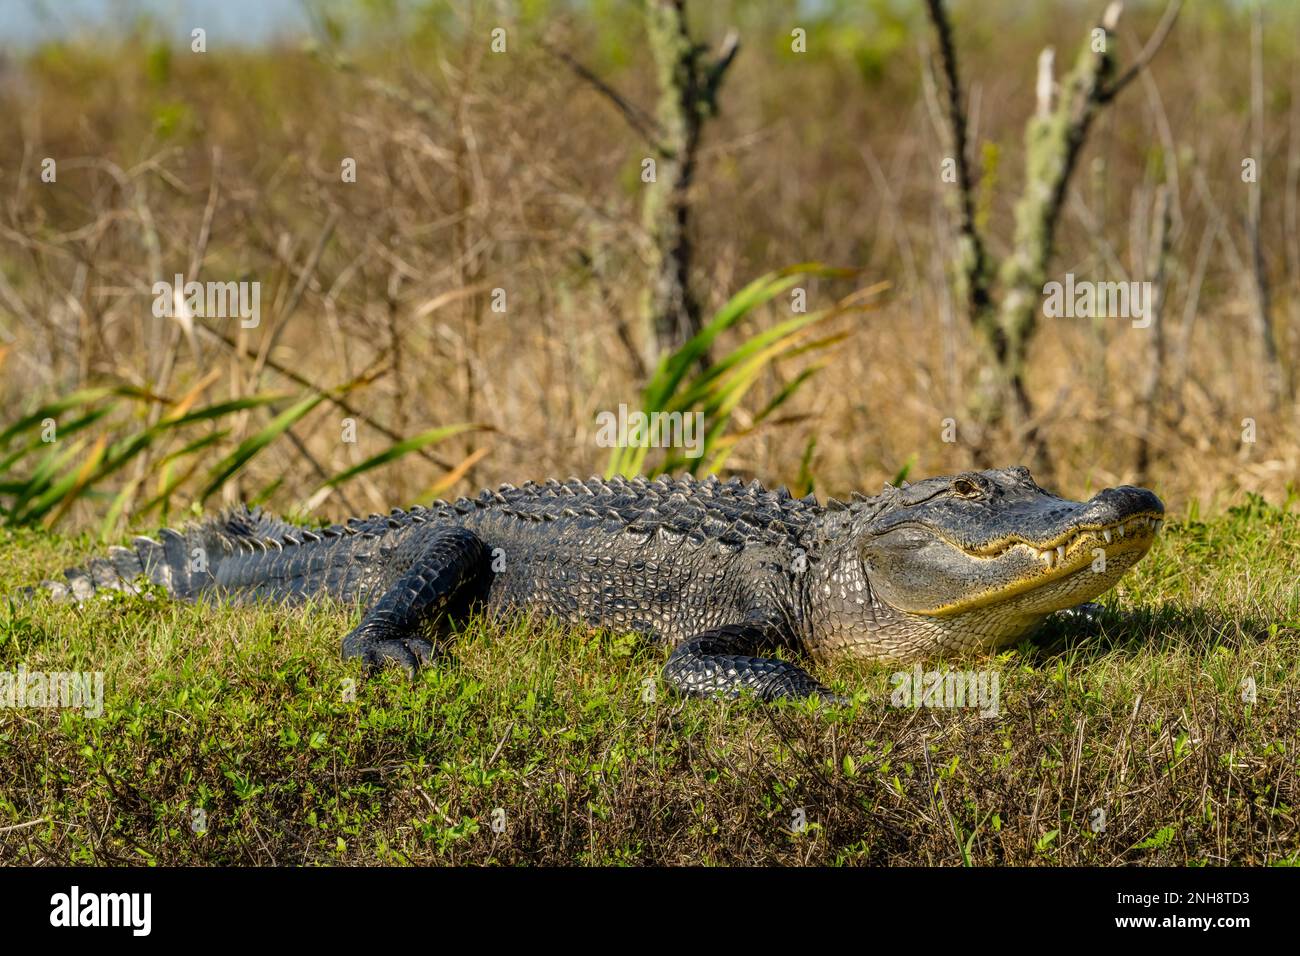 Florida alligator Stock Photo